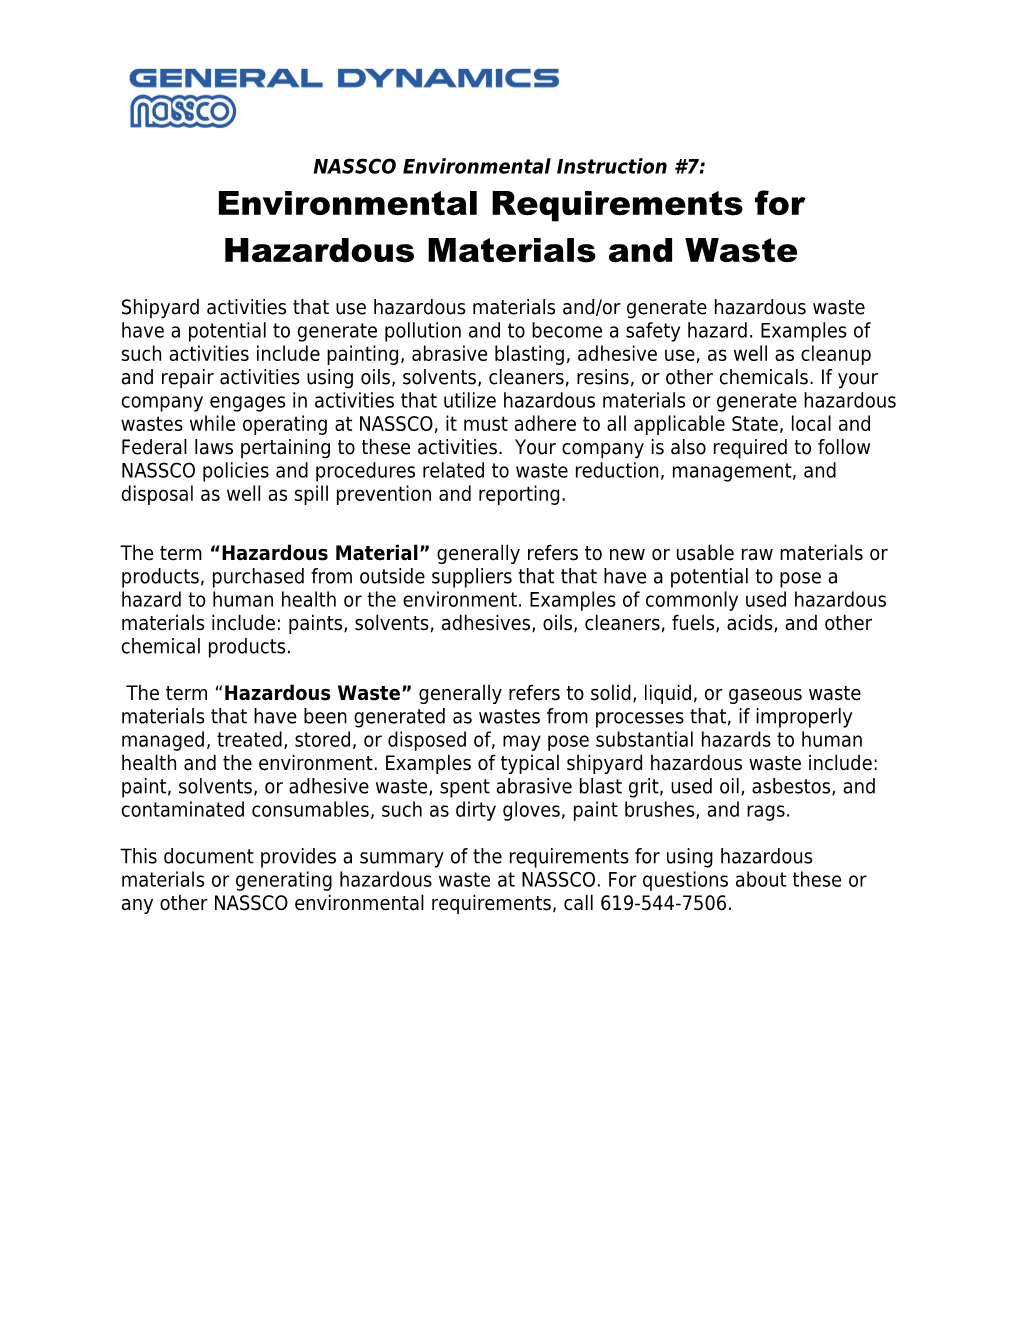 Environmental Requirementsfor Hazardous Materials and Waste